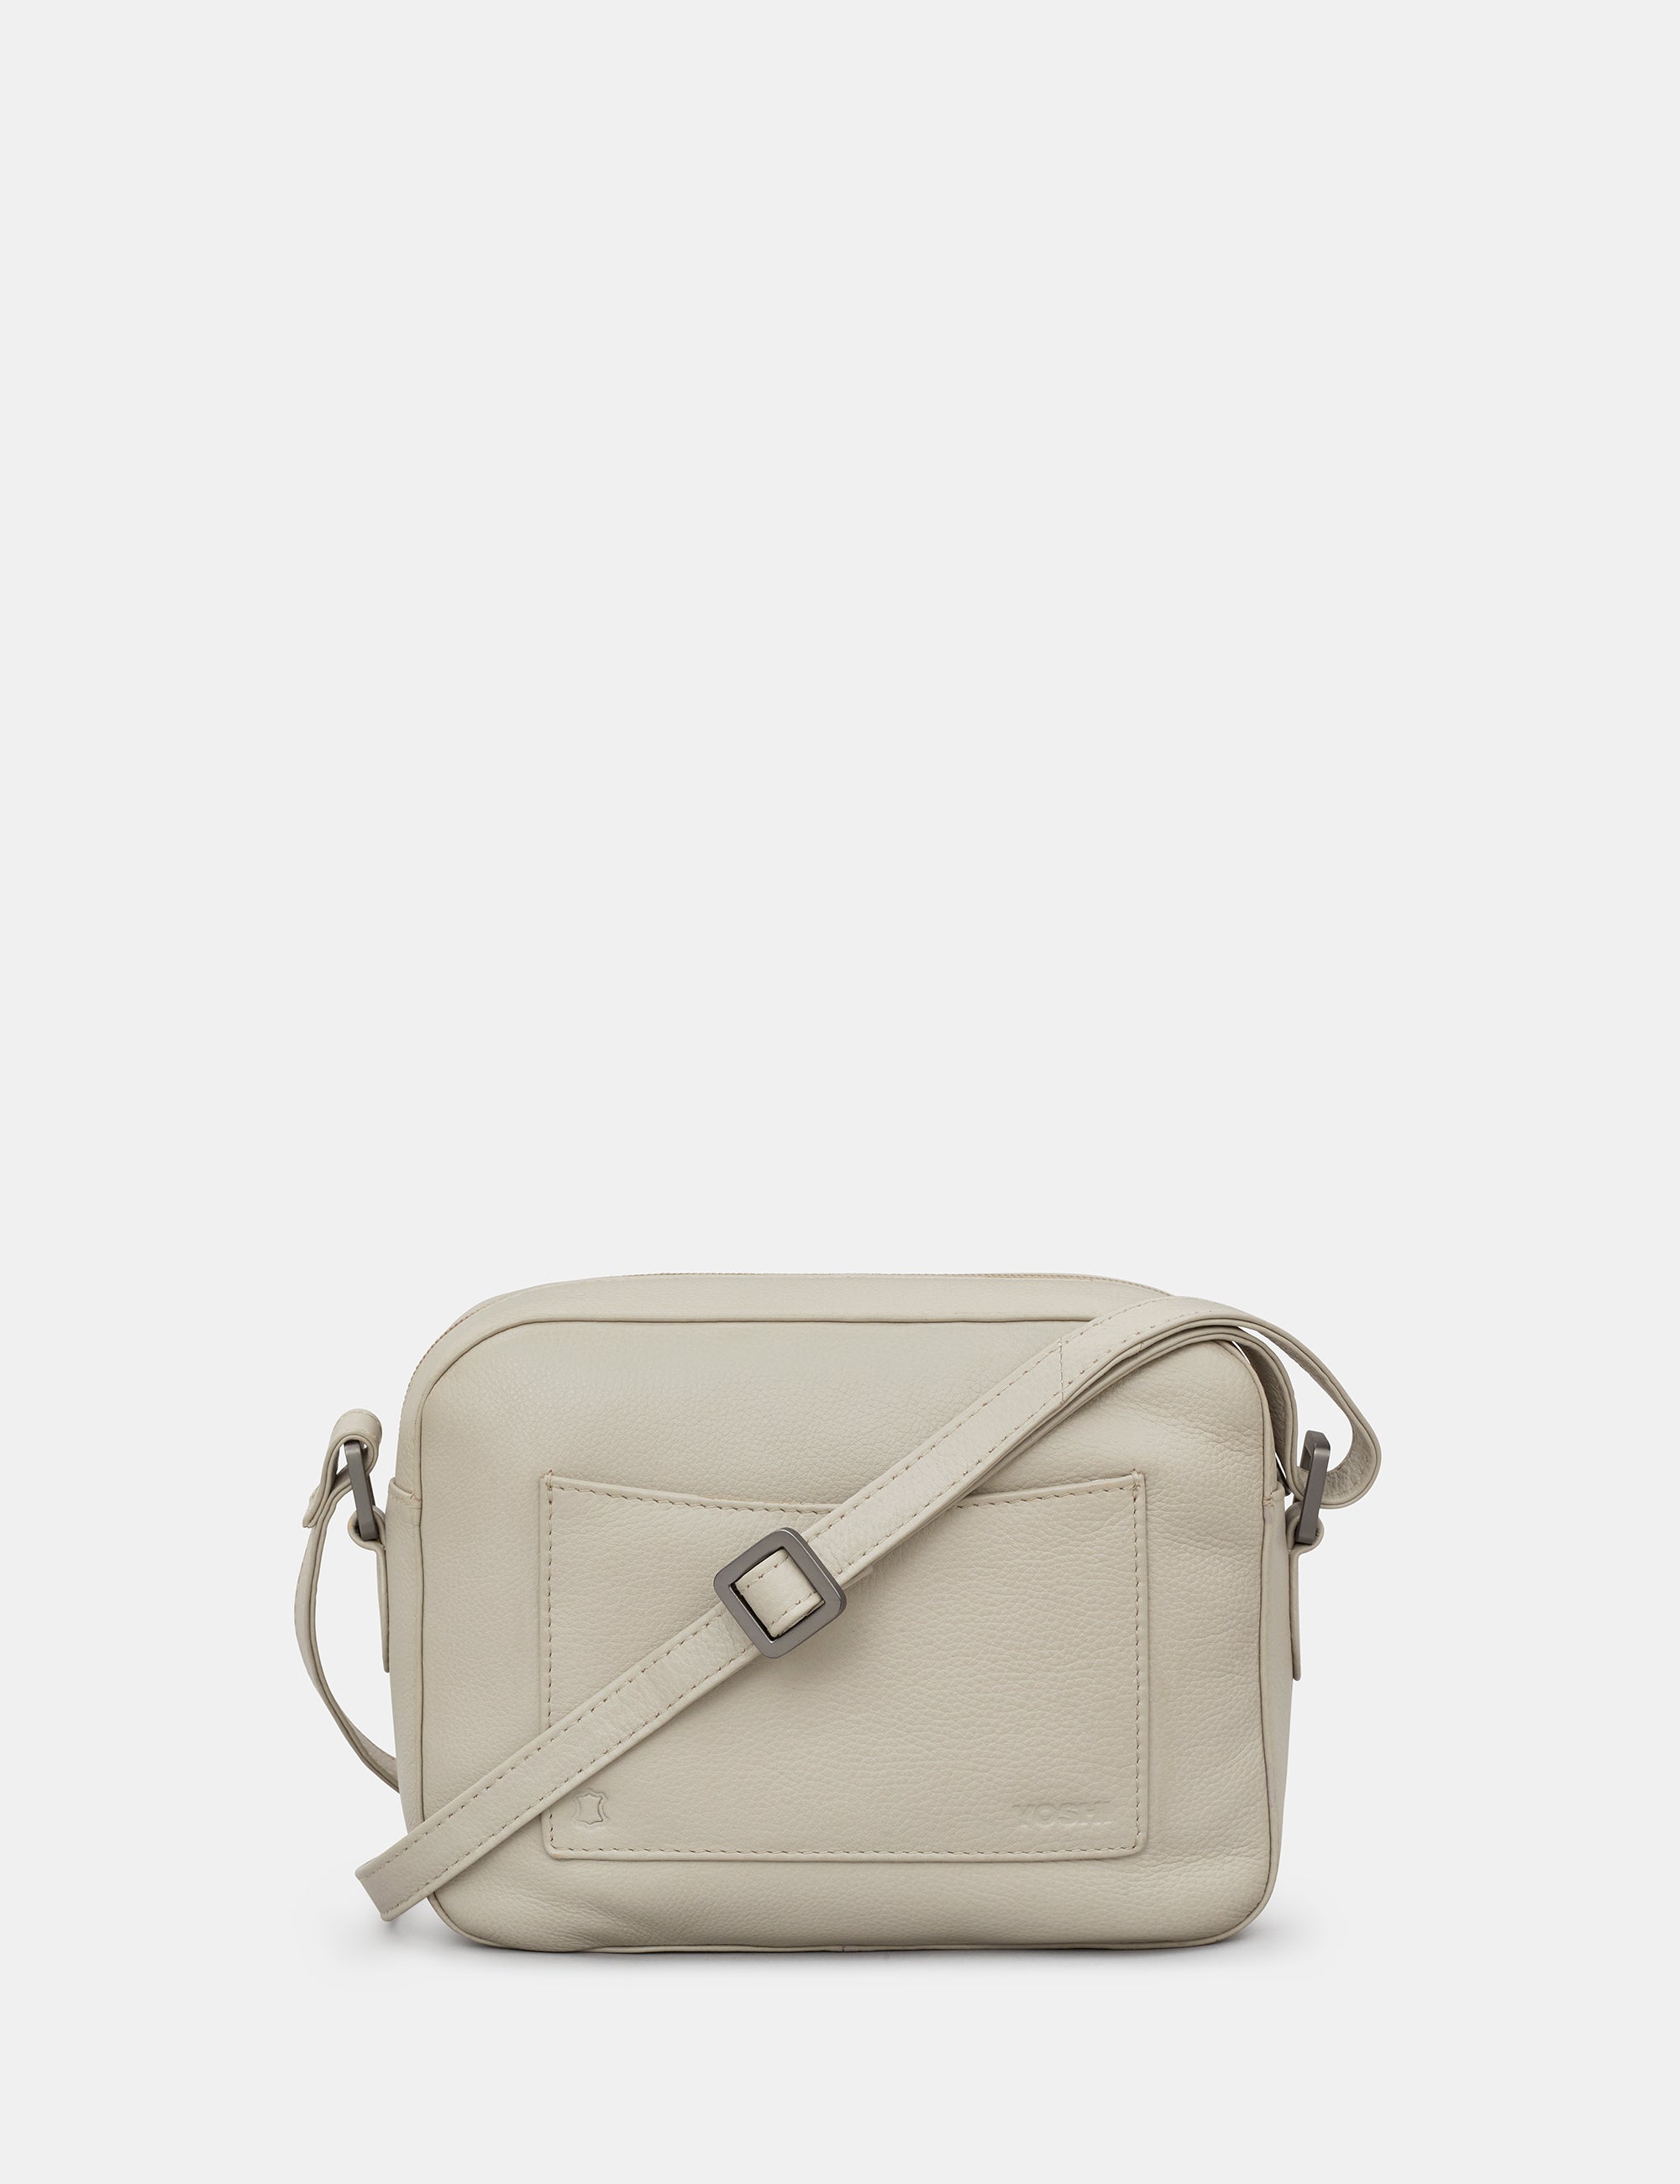 Emerson Multiway Leather Cross Body Bag | Handbag For Ladies by Yoshi ...